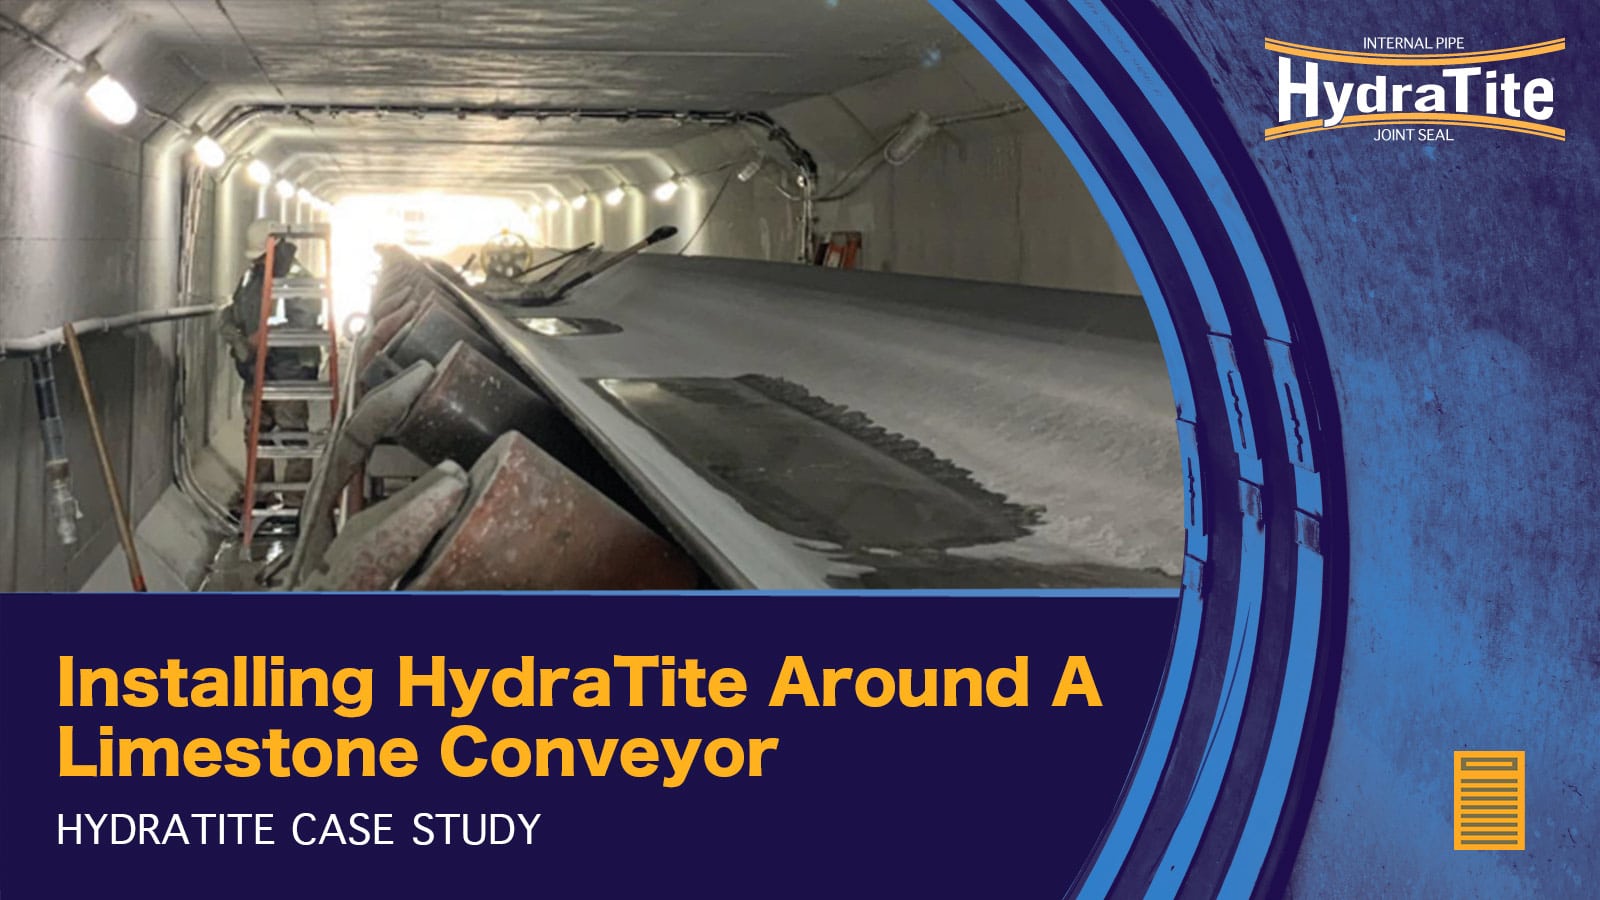 Teaser Image of HydraTite Installed around a conveyor, 'Installing HydraTite Around A Limestone Conveyor, HydraTite Case Study'